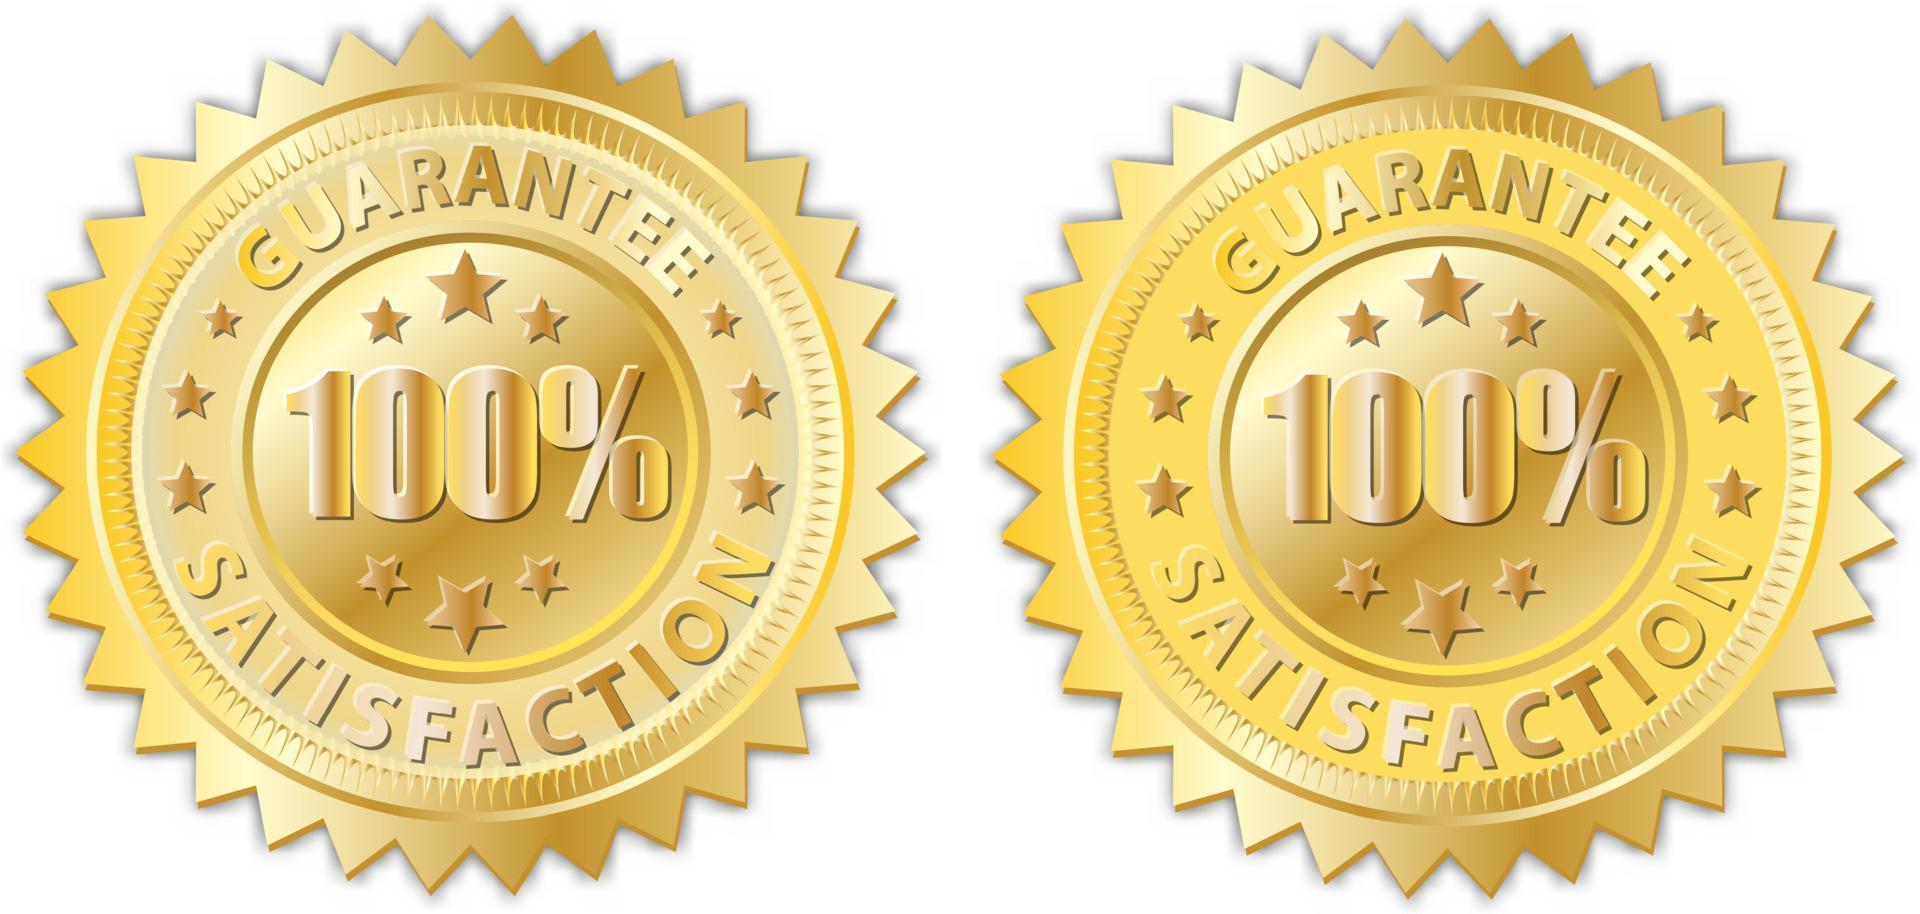 guarantee satisfaction 100 percent in gold and emboss design vector